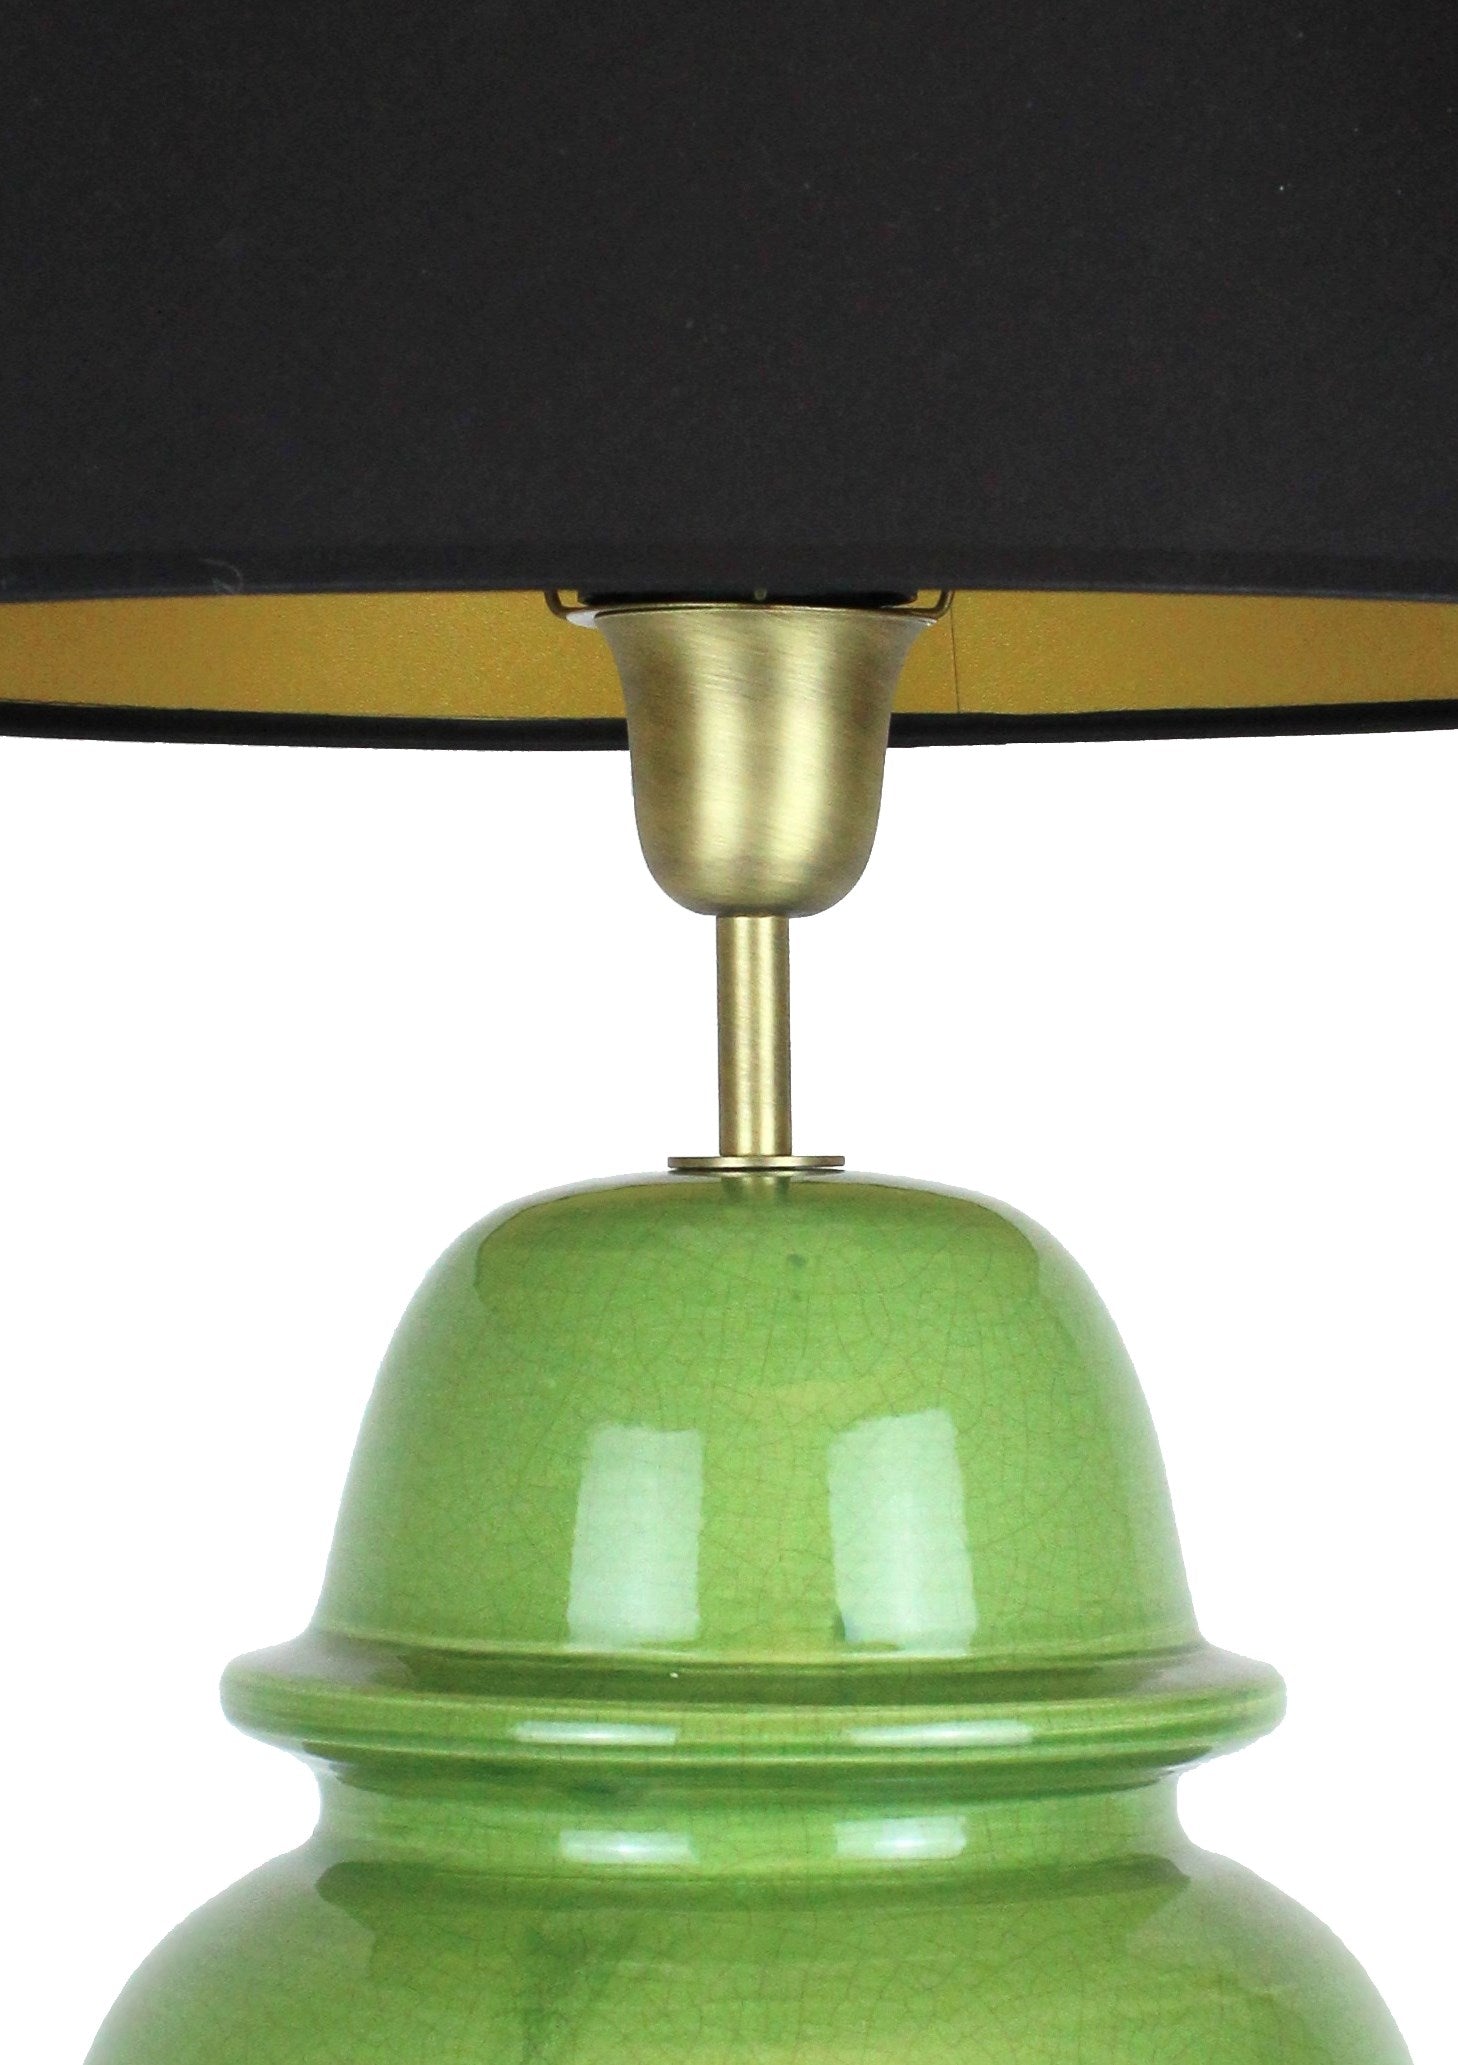 grüne Keramiklampe mit Messinggestänge